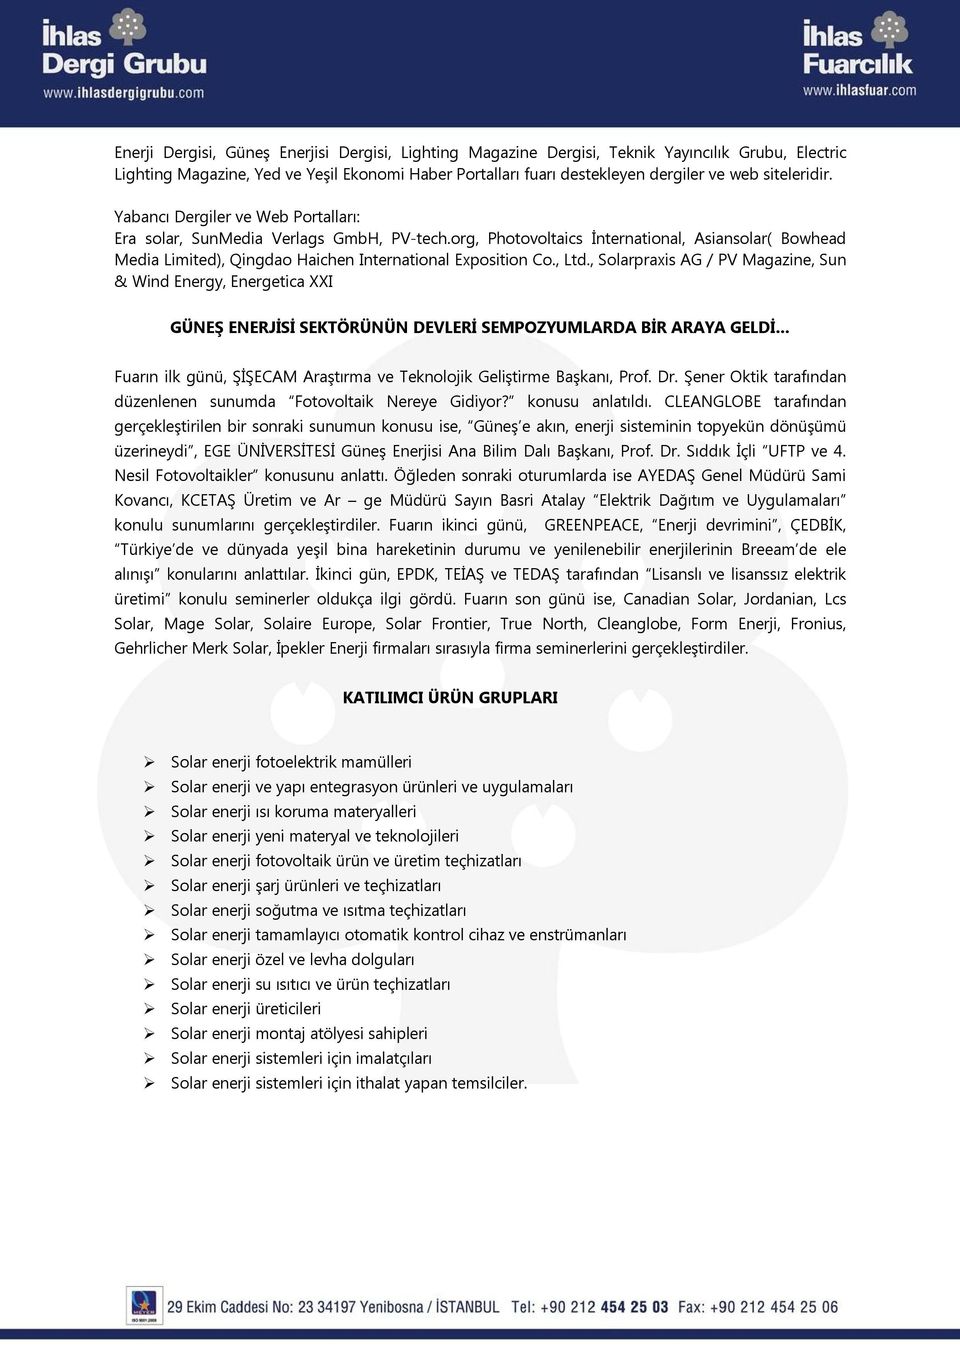 org, Photovoltaics İnternational, Asiansolar( Bowhead Media Limited), Qingdao Haichen International Exposition Co., Ltd.